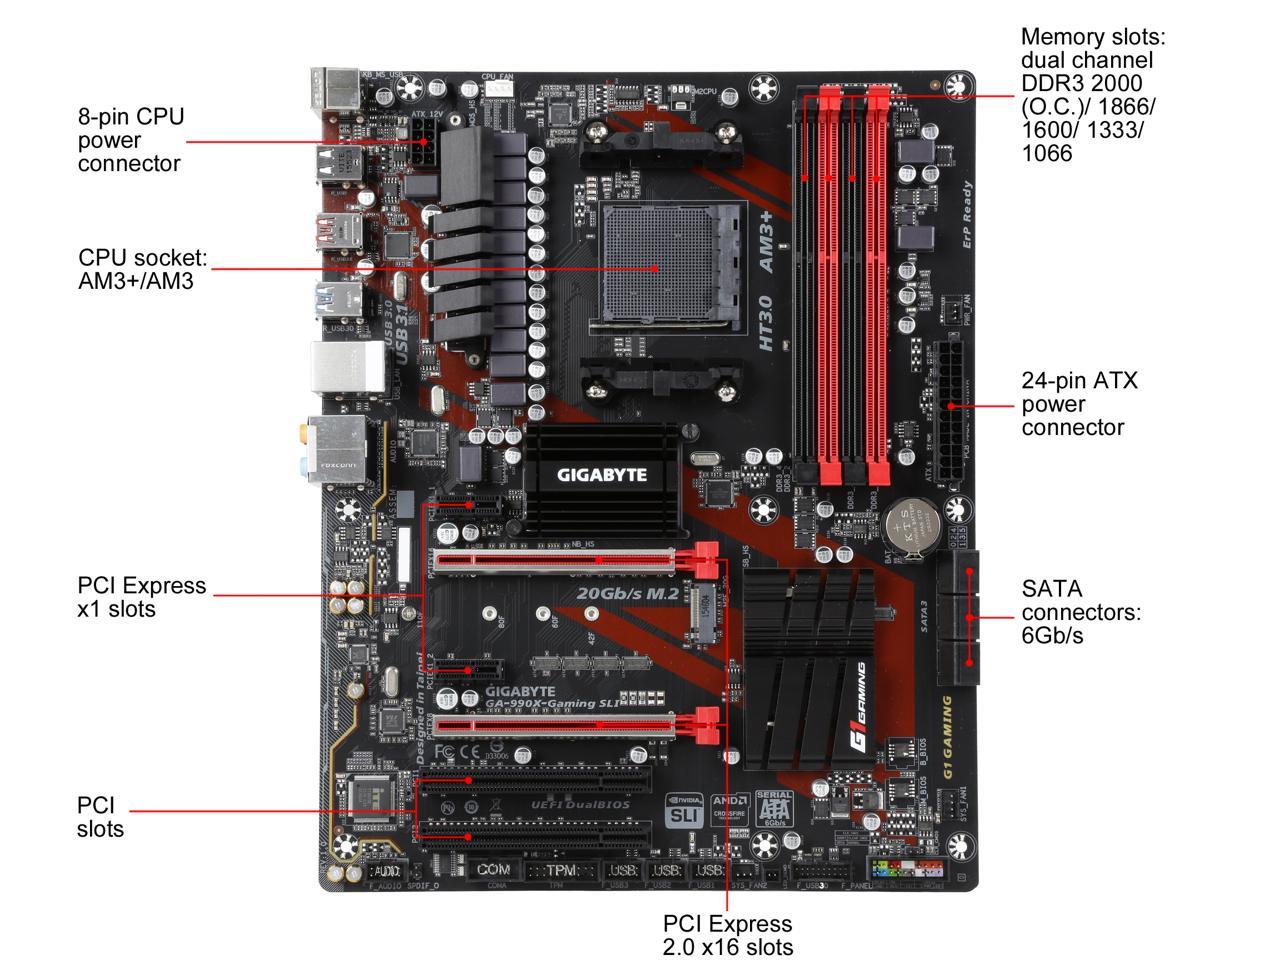 GIGABYTE GA-990X-Gaming SLI (rev. 1.0) AM3+/AM3 ATX AMD Motherboard